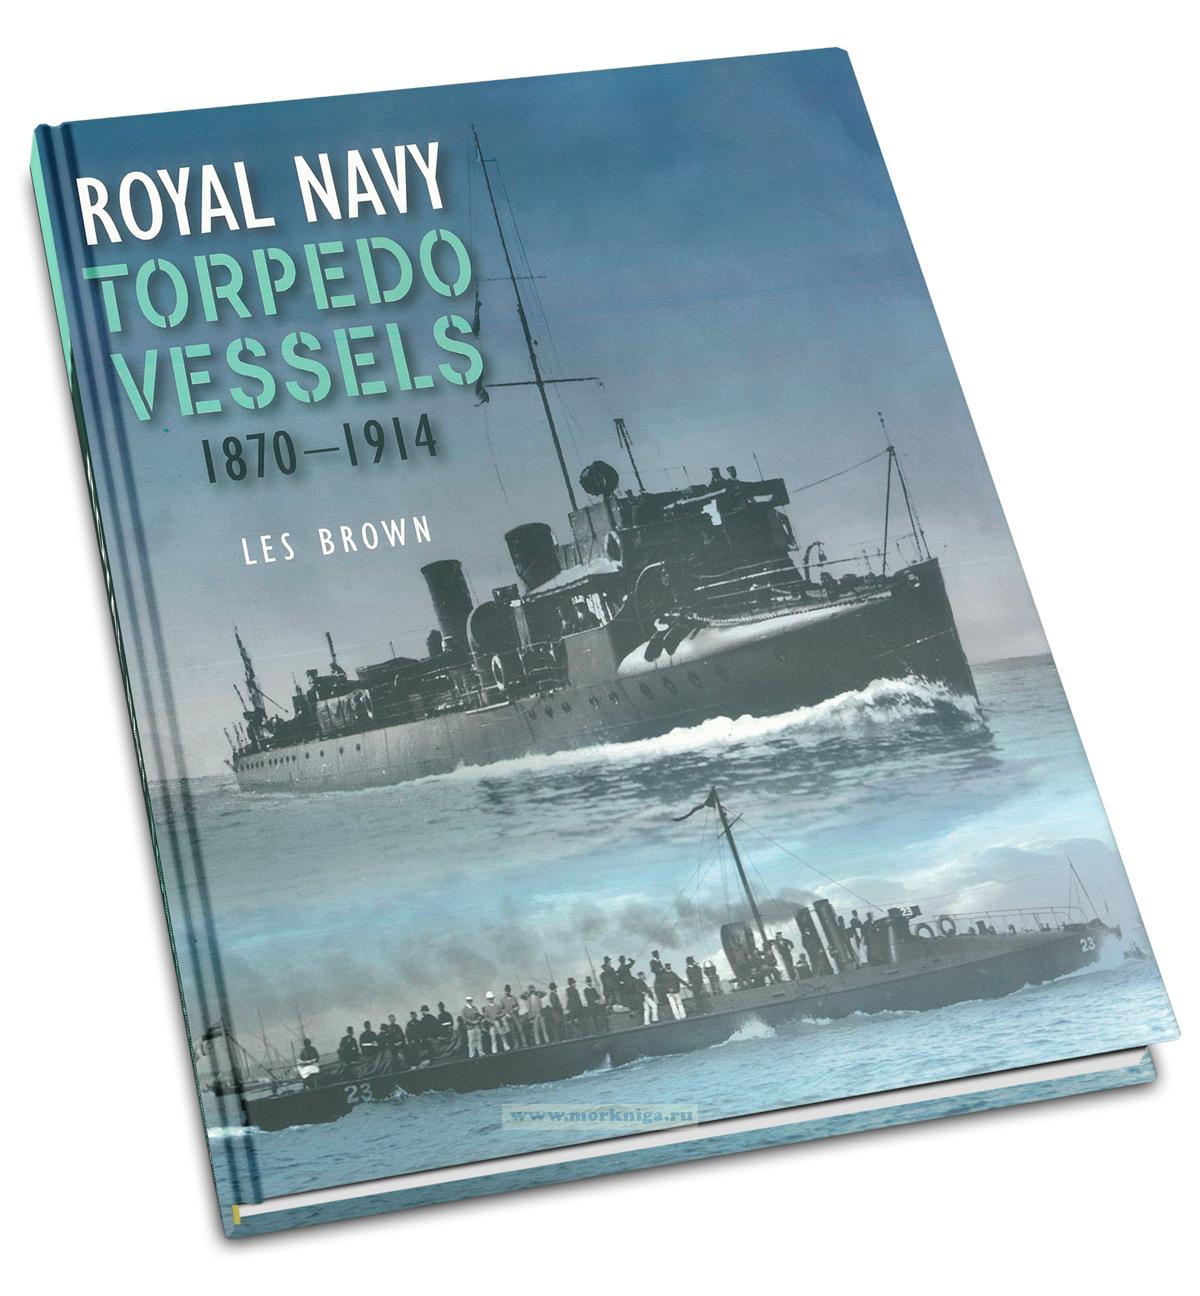 Royal Navy Torpedo Vessels, 1870-1914